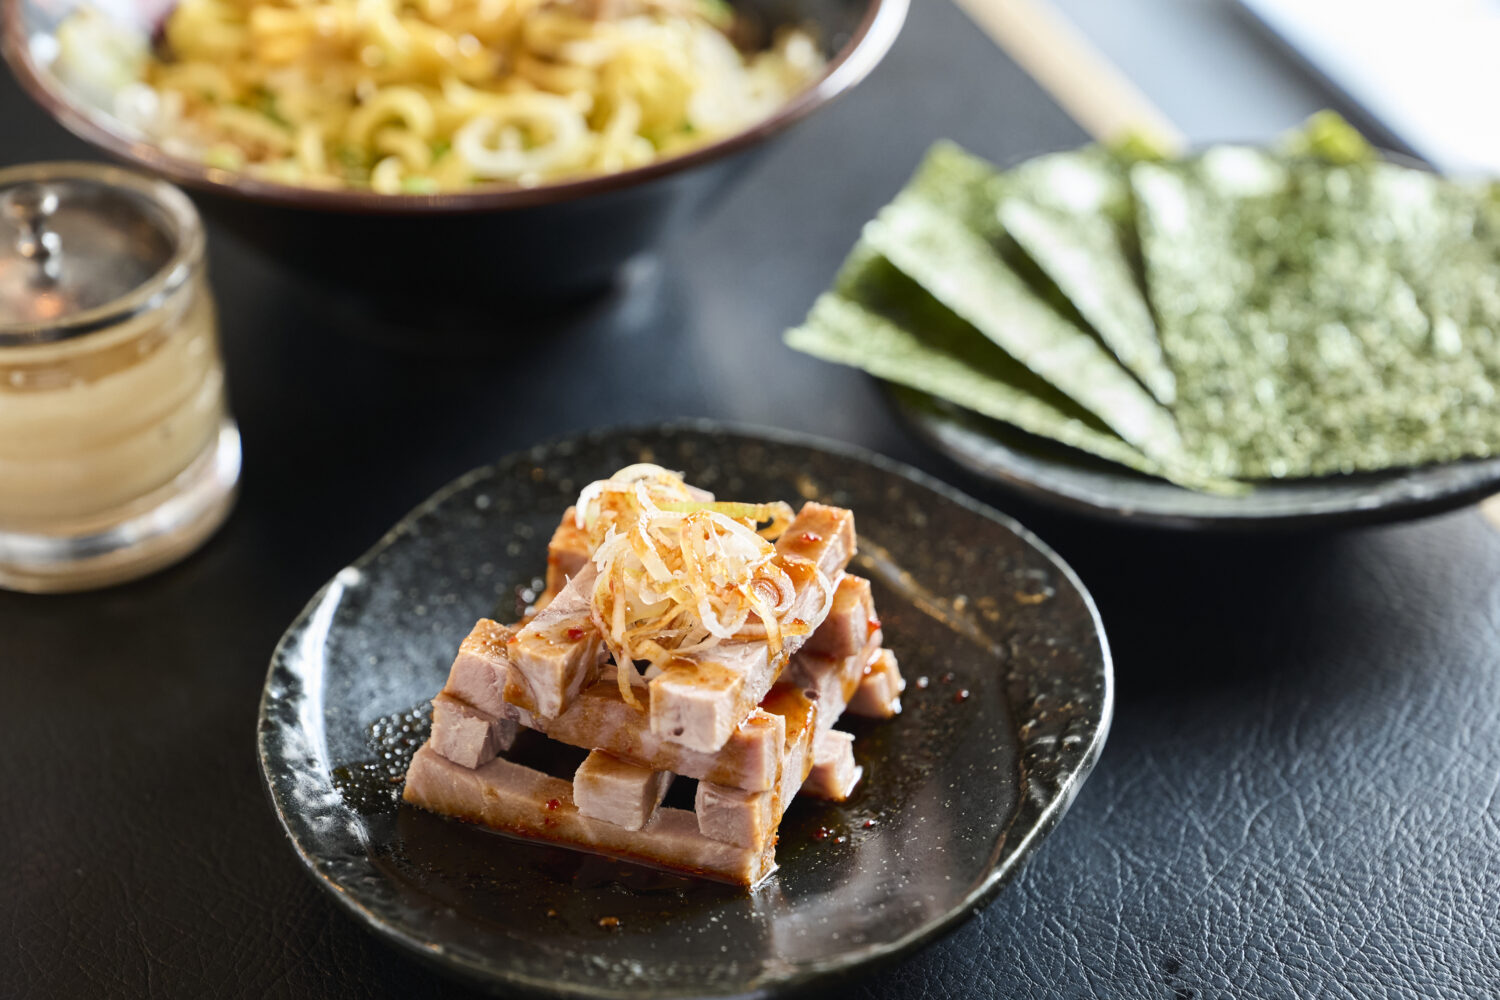 Tips for enjoying tsumami chashu (roast pork side dish)